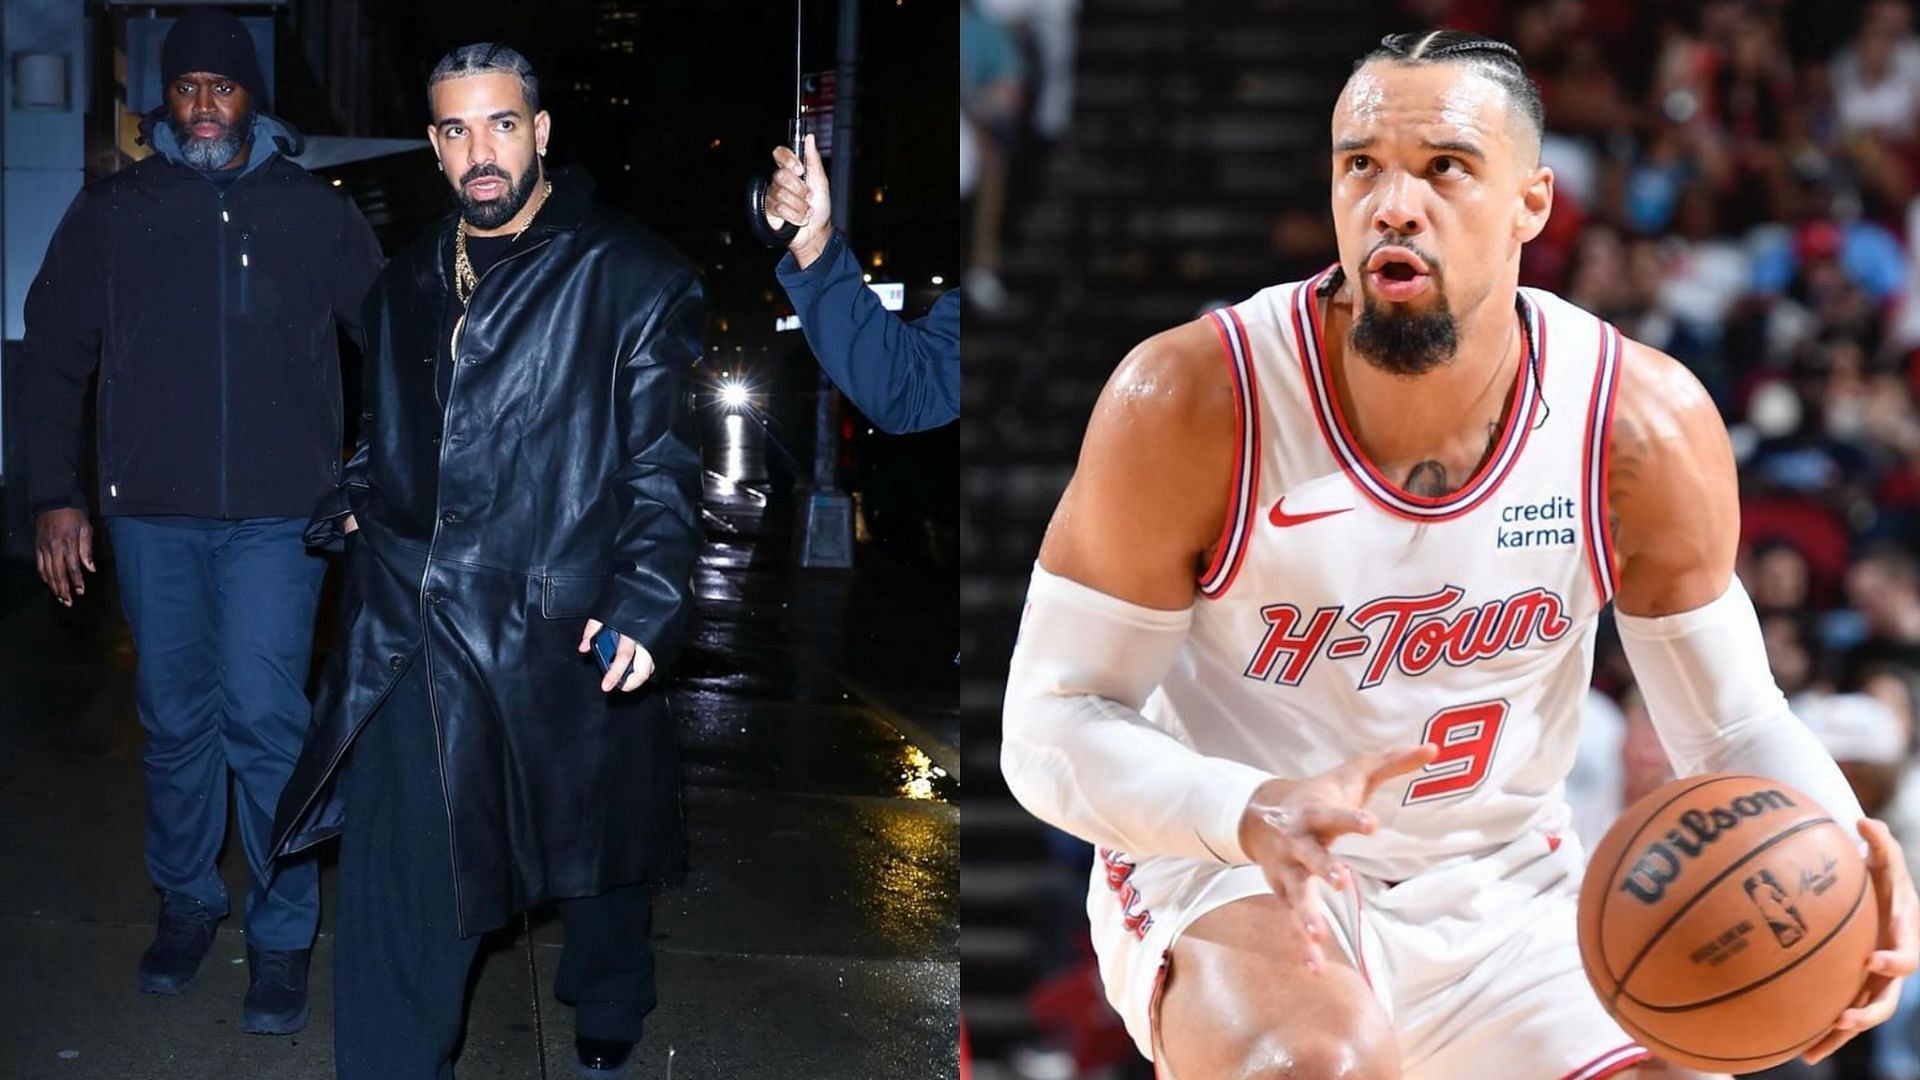 Fans start comparing Drake to Dillon Brooks